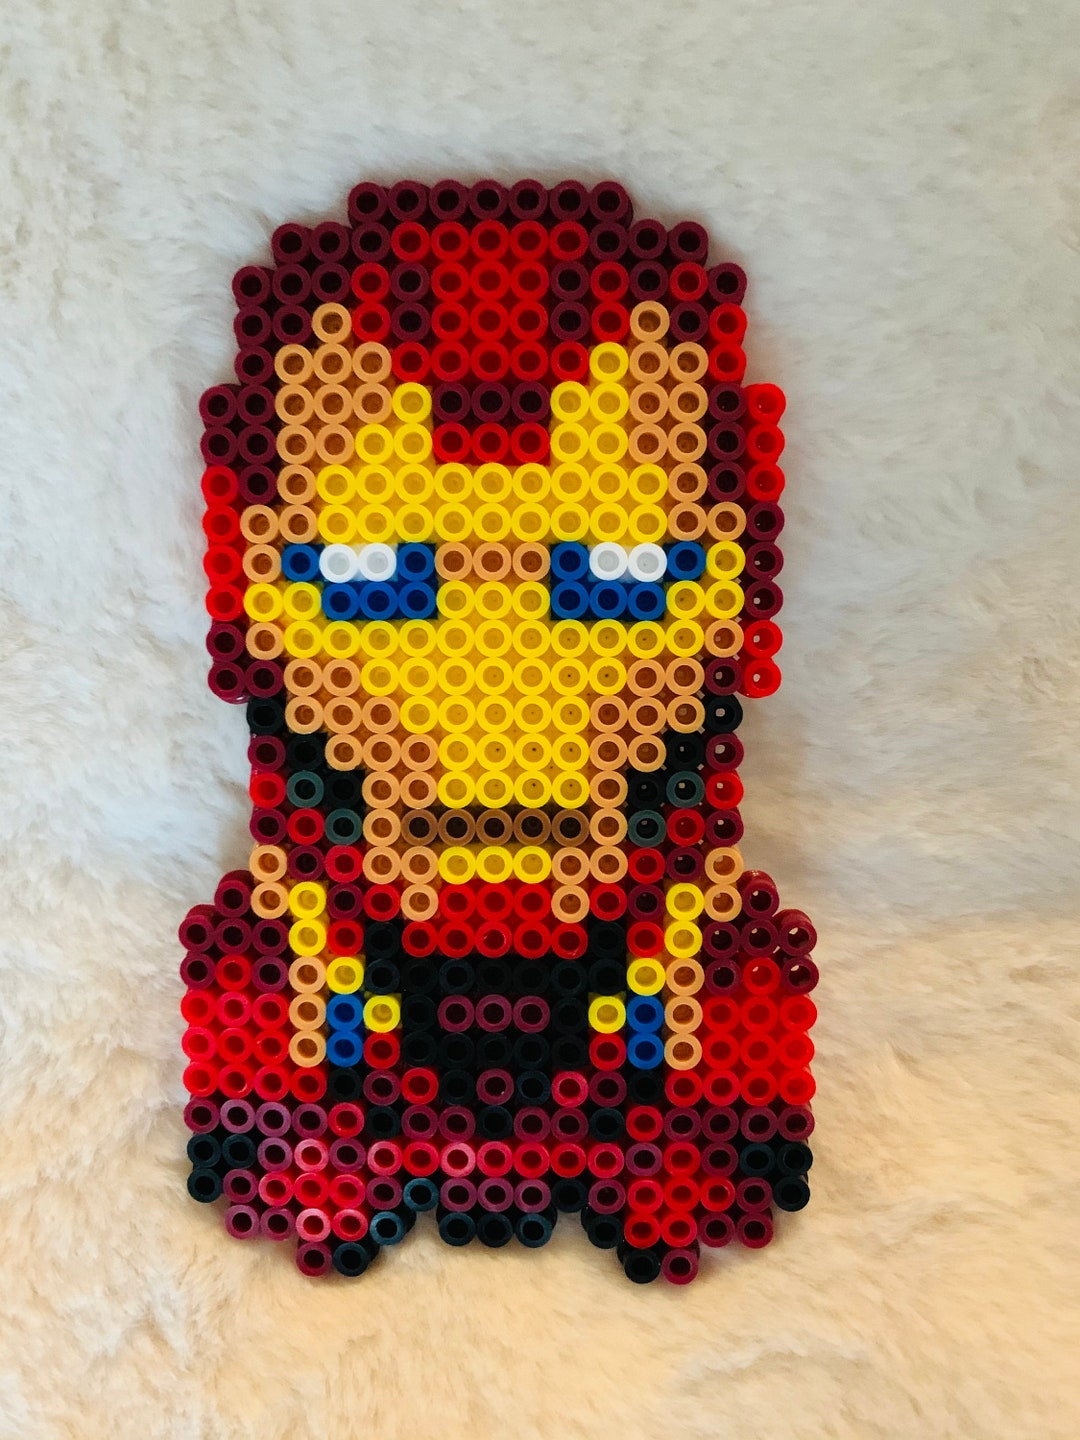 I am iron man in perler bead form : r/Marvel